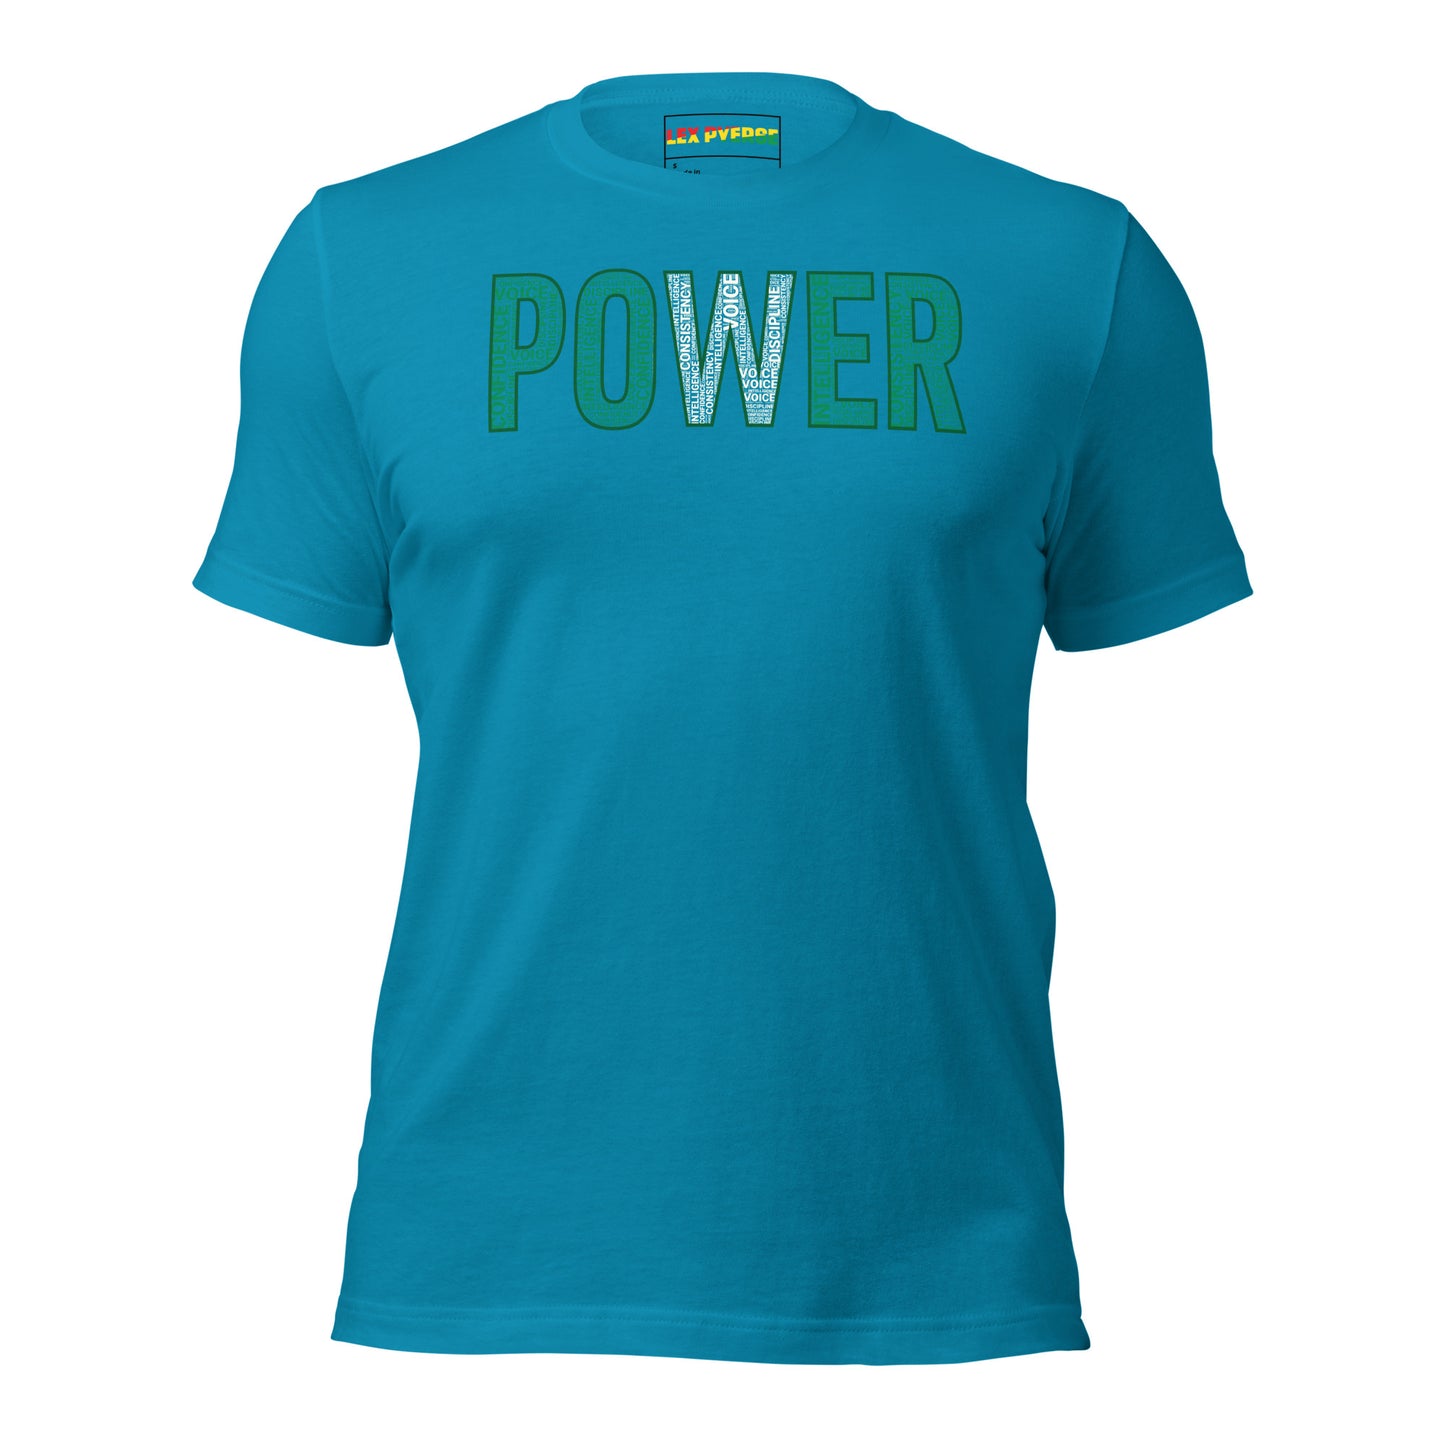 POWER Nigerian Inspired Unisex t-shirt